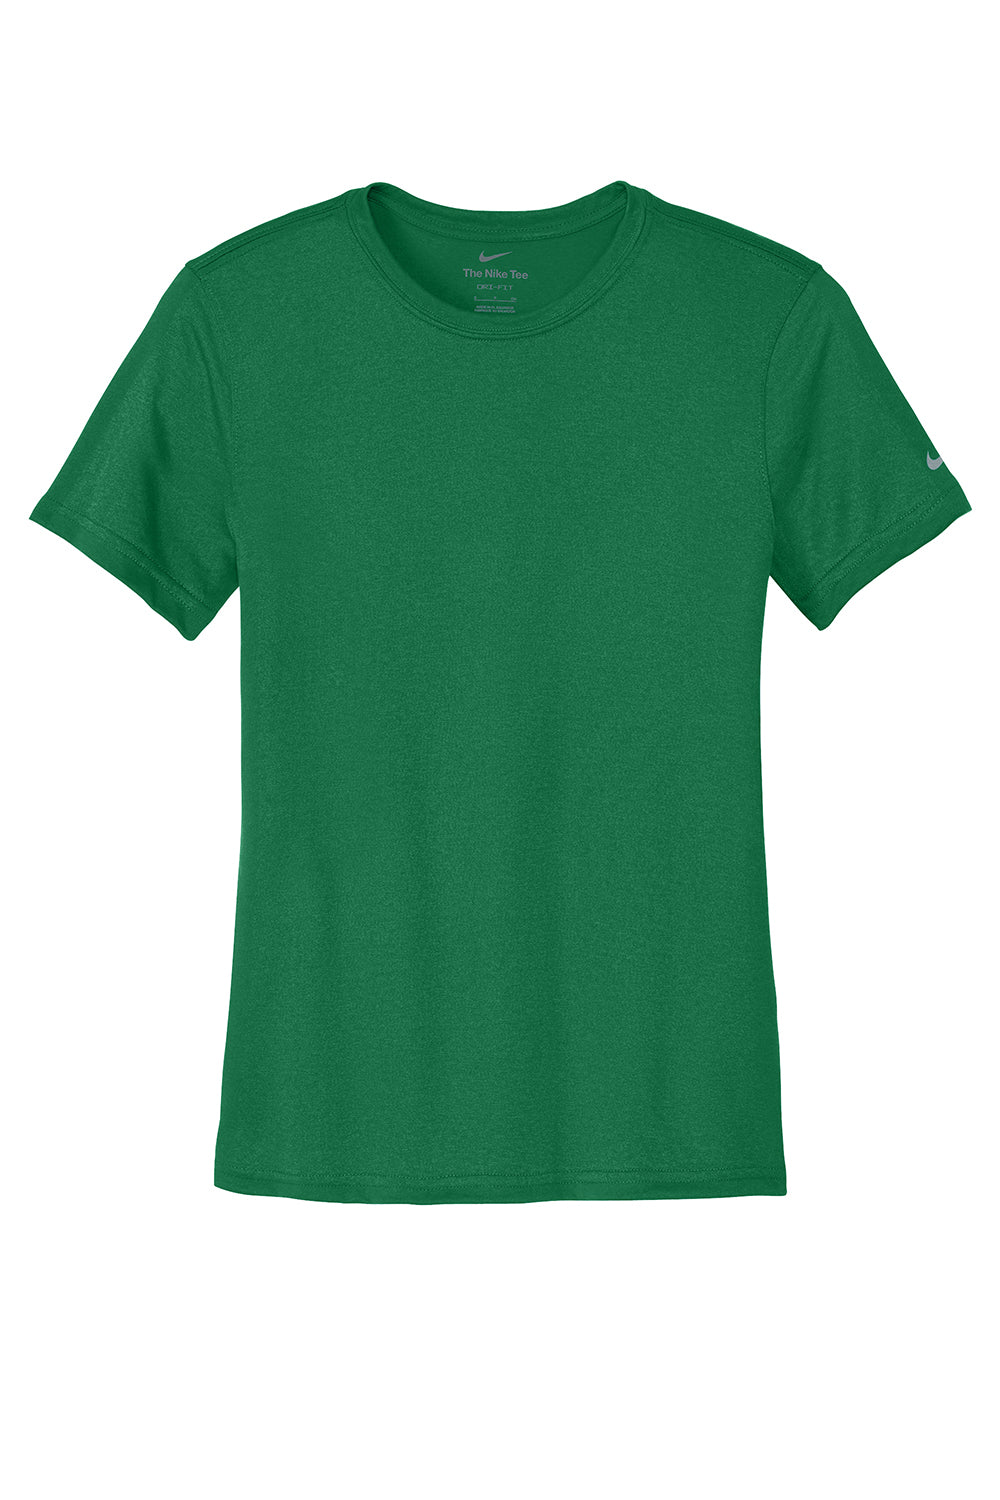 Nike NKDX8734 Womens rLegend Dri-Fit Moisture Wicking Short Sleeve Crewneck T-Shirt Gorge Green Flat Front